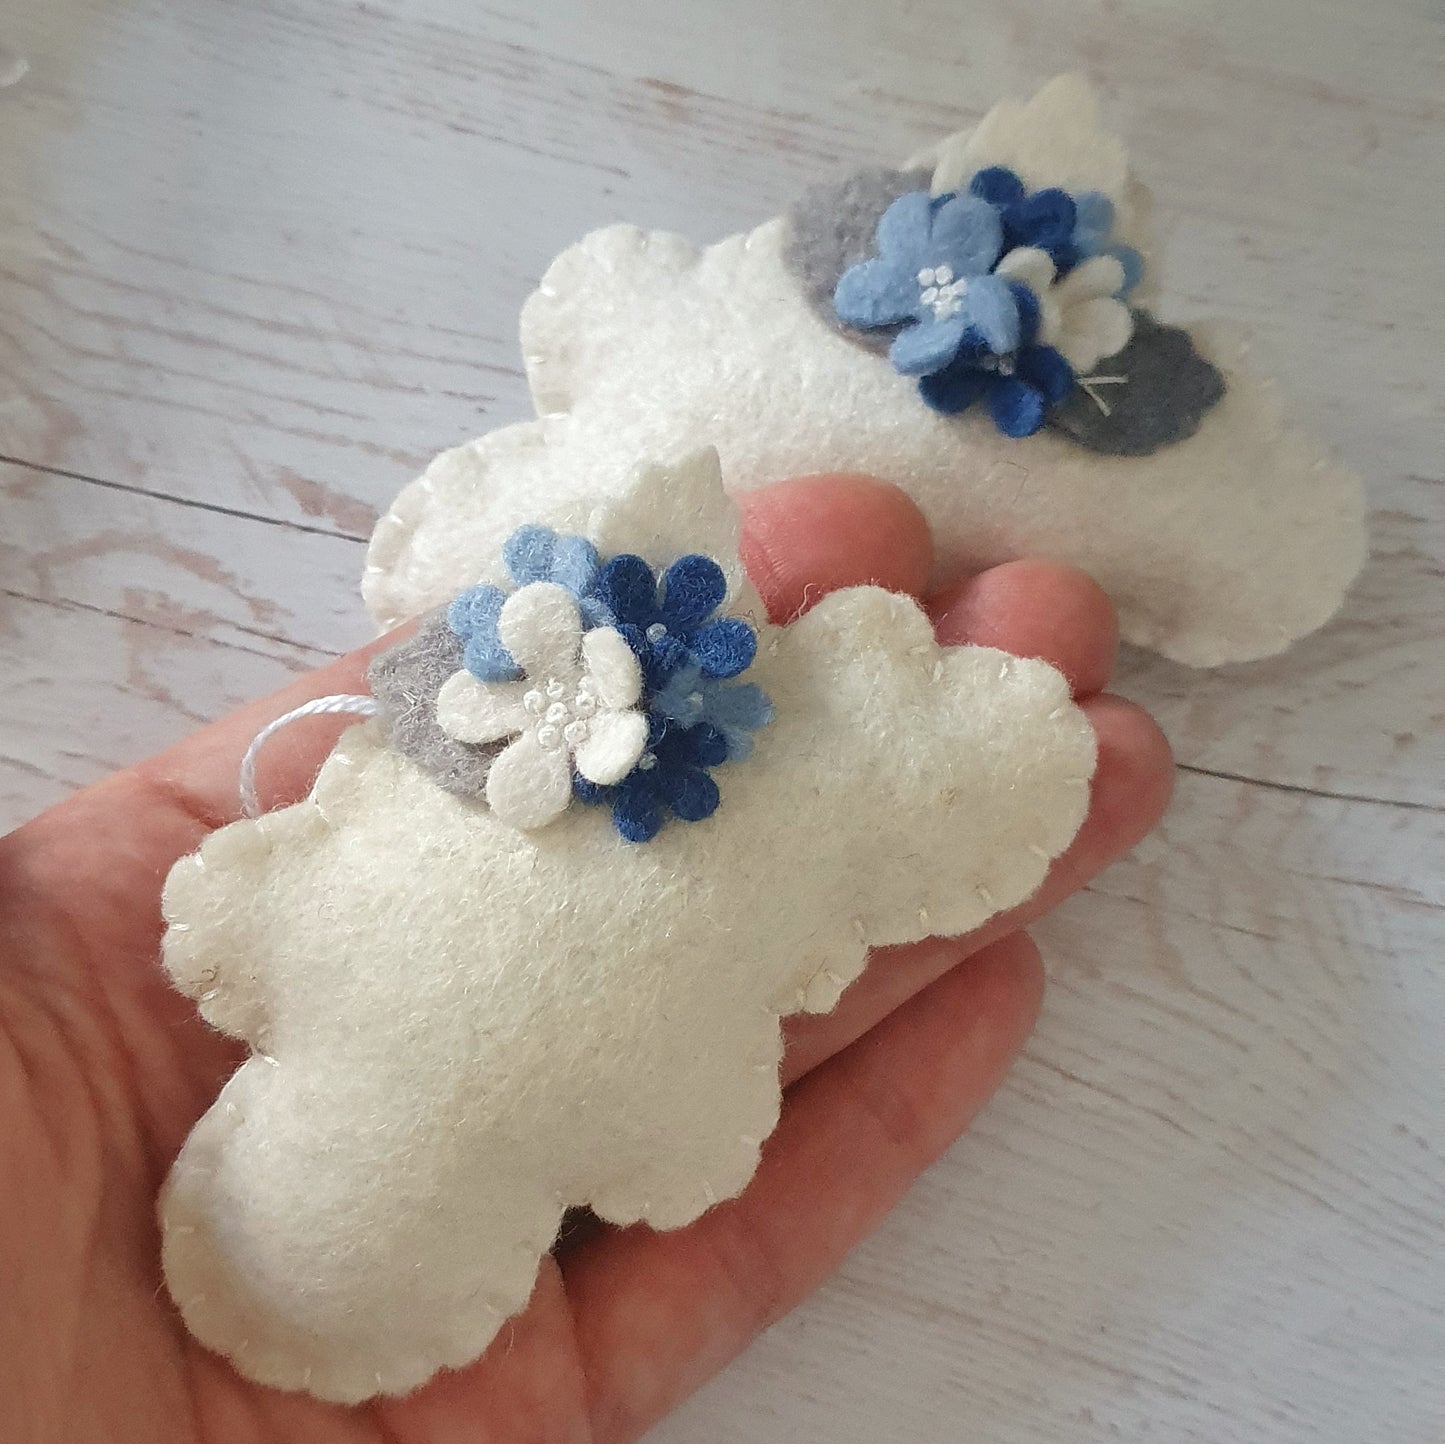 Cloud ornament with blue flowers - felt ornaments